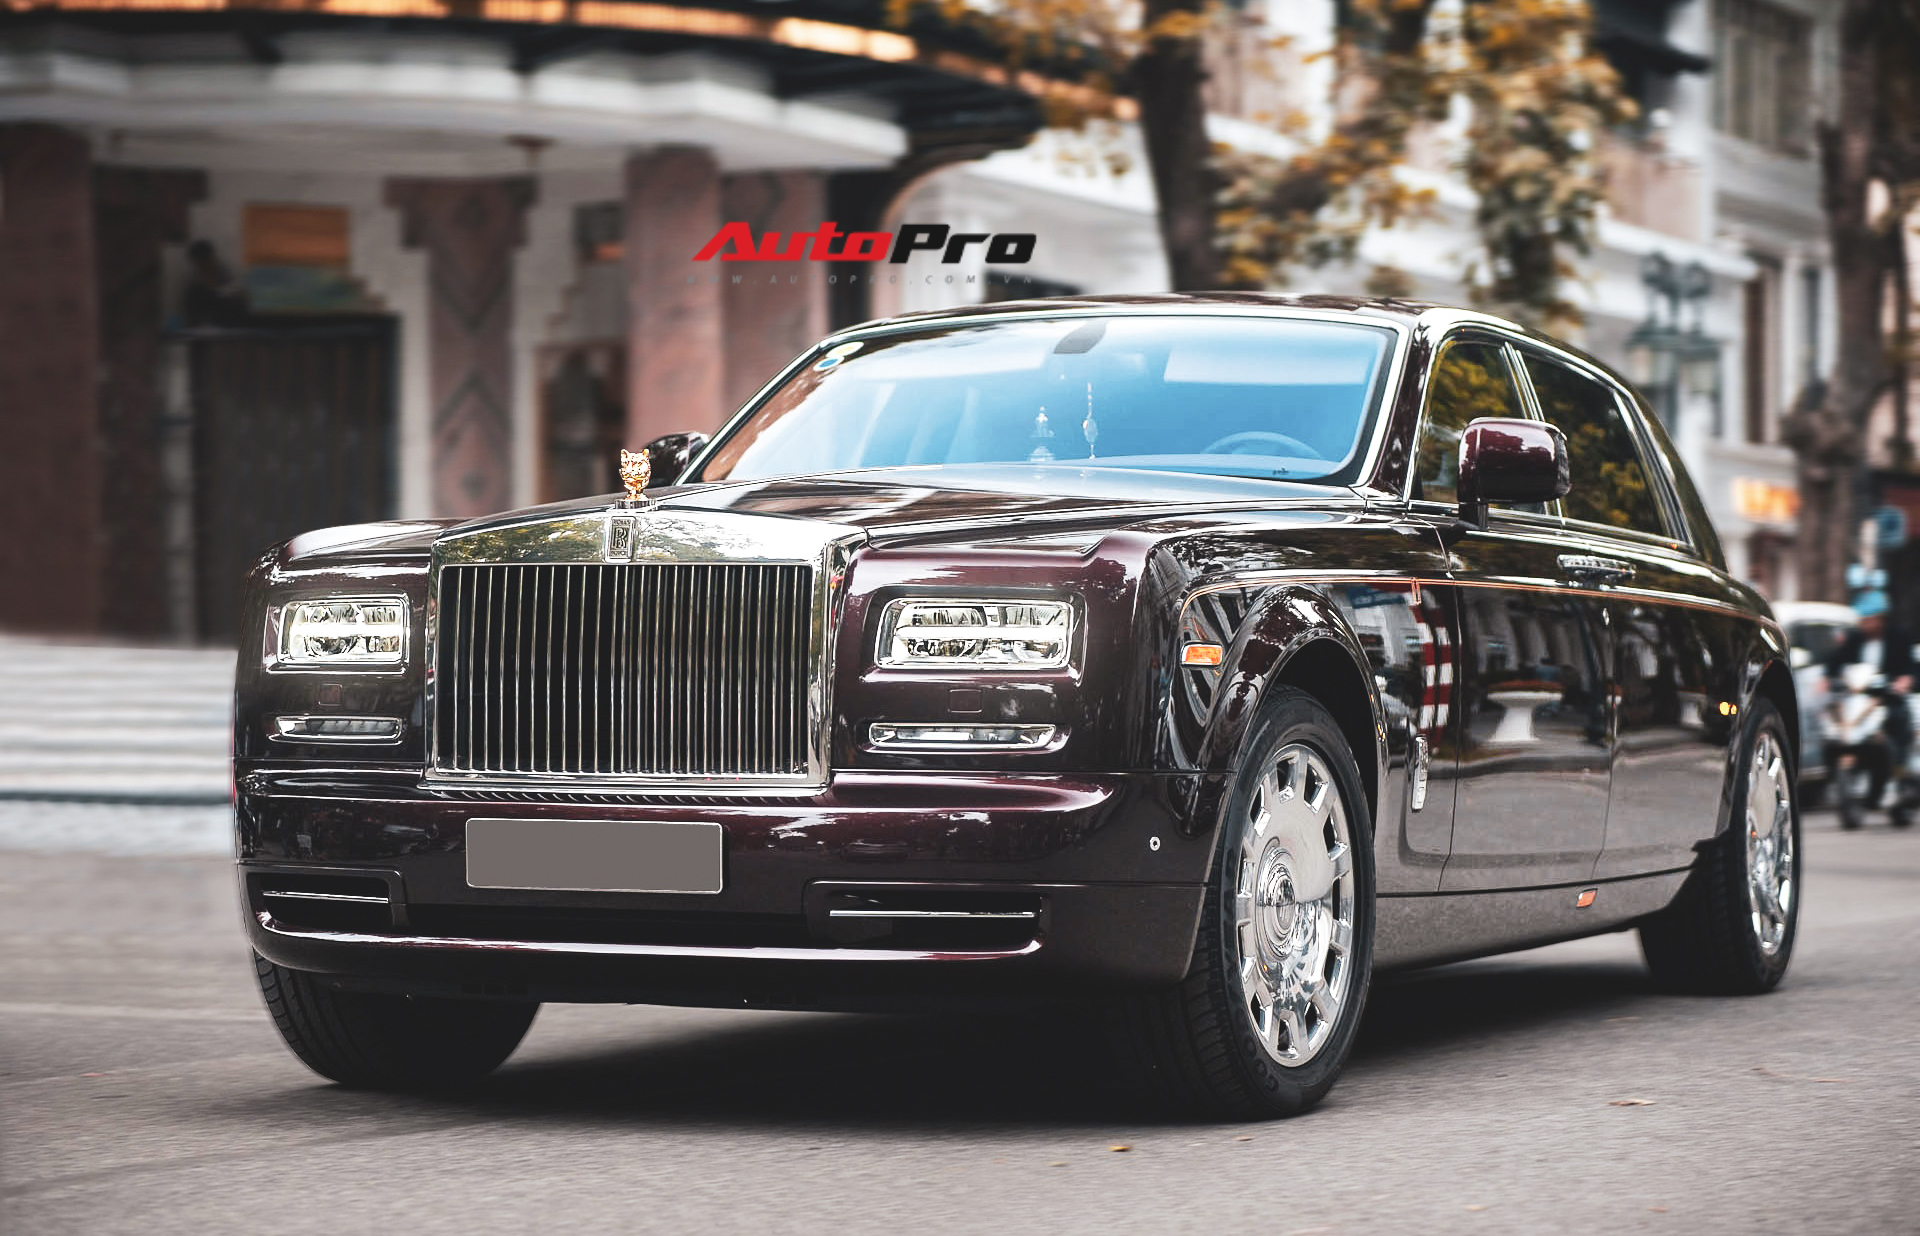 Tải xuống APK Rolls Royce Phantom Car Photos and Videos cho Android